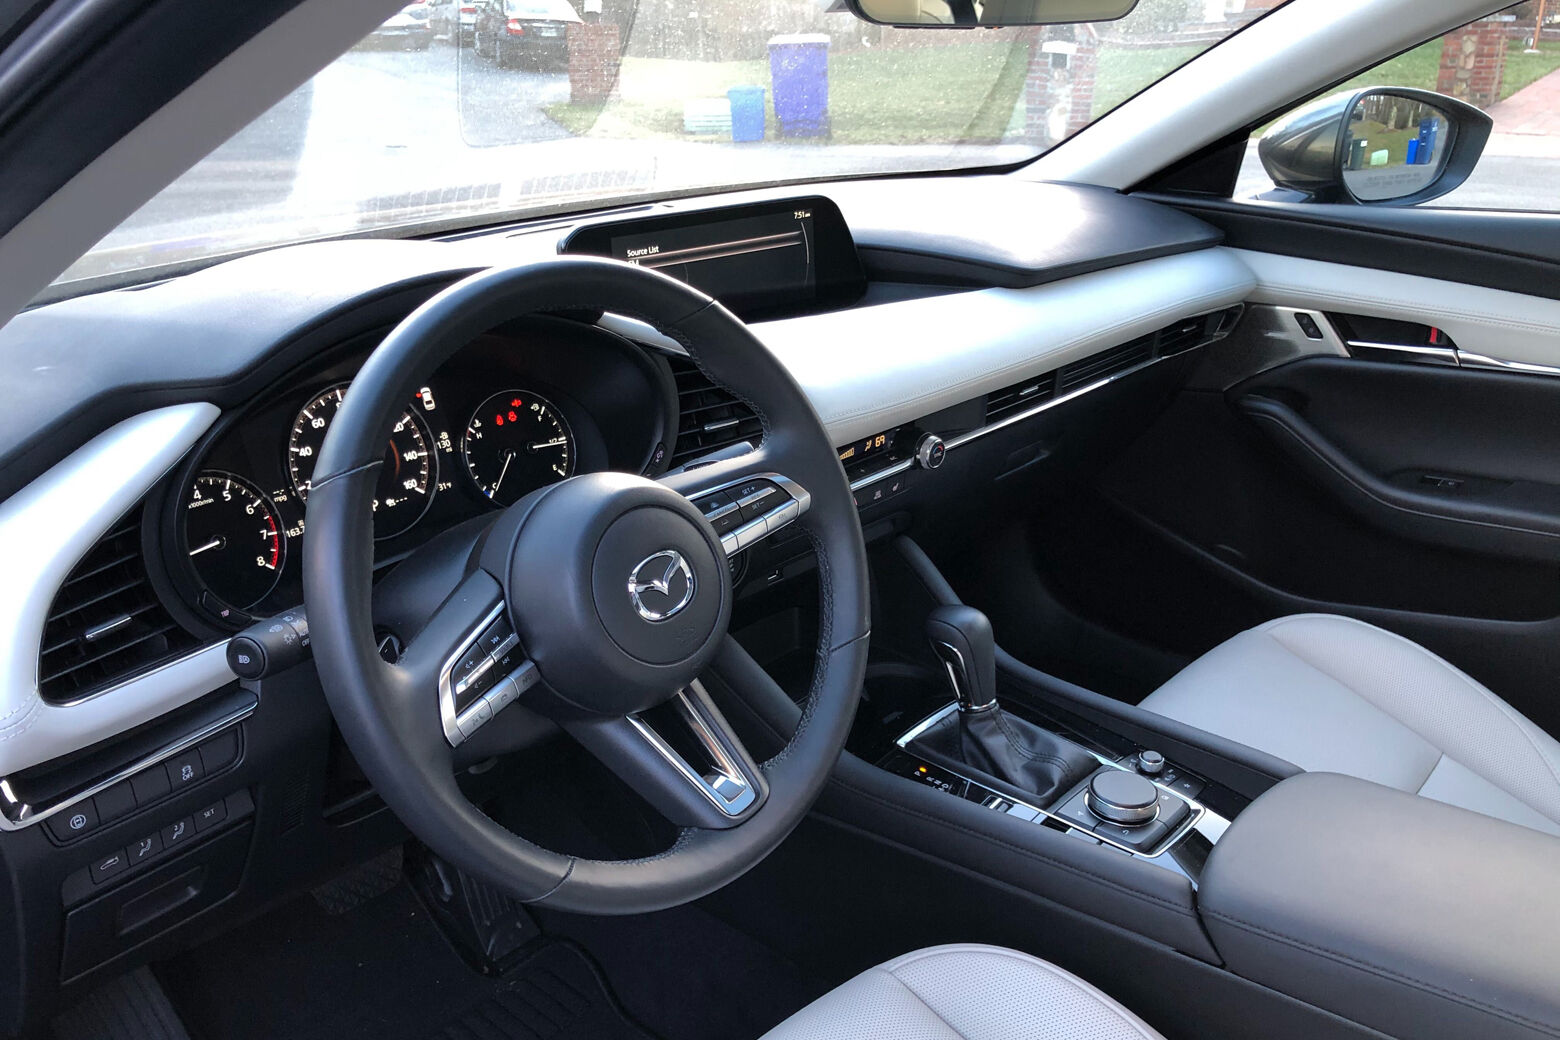 Mazda 3 interior